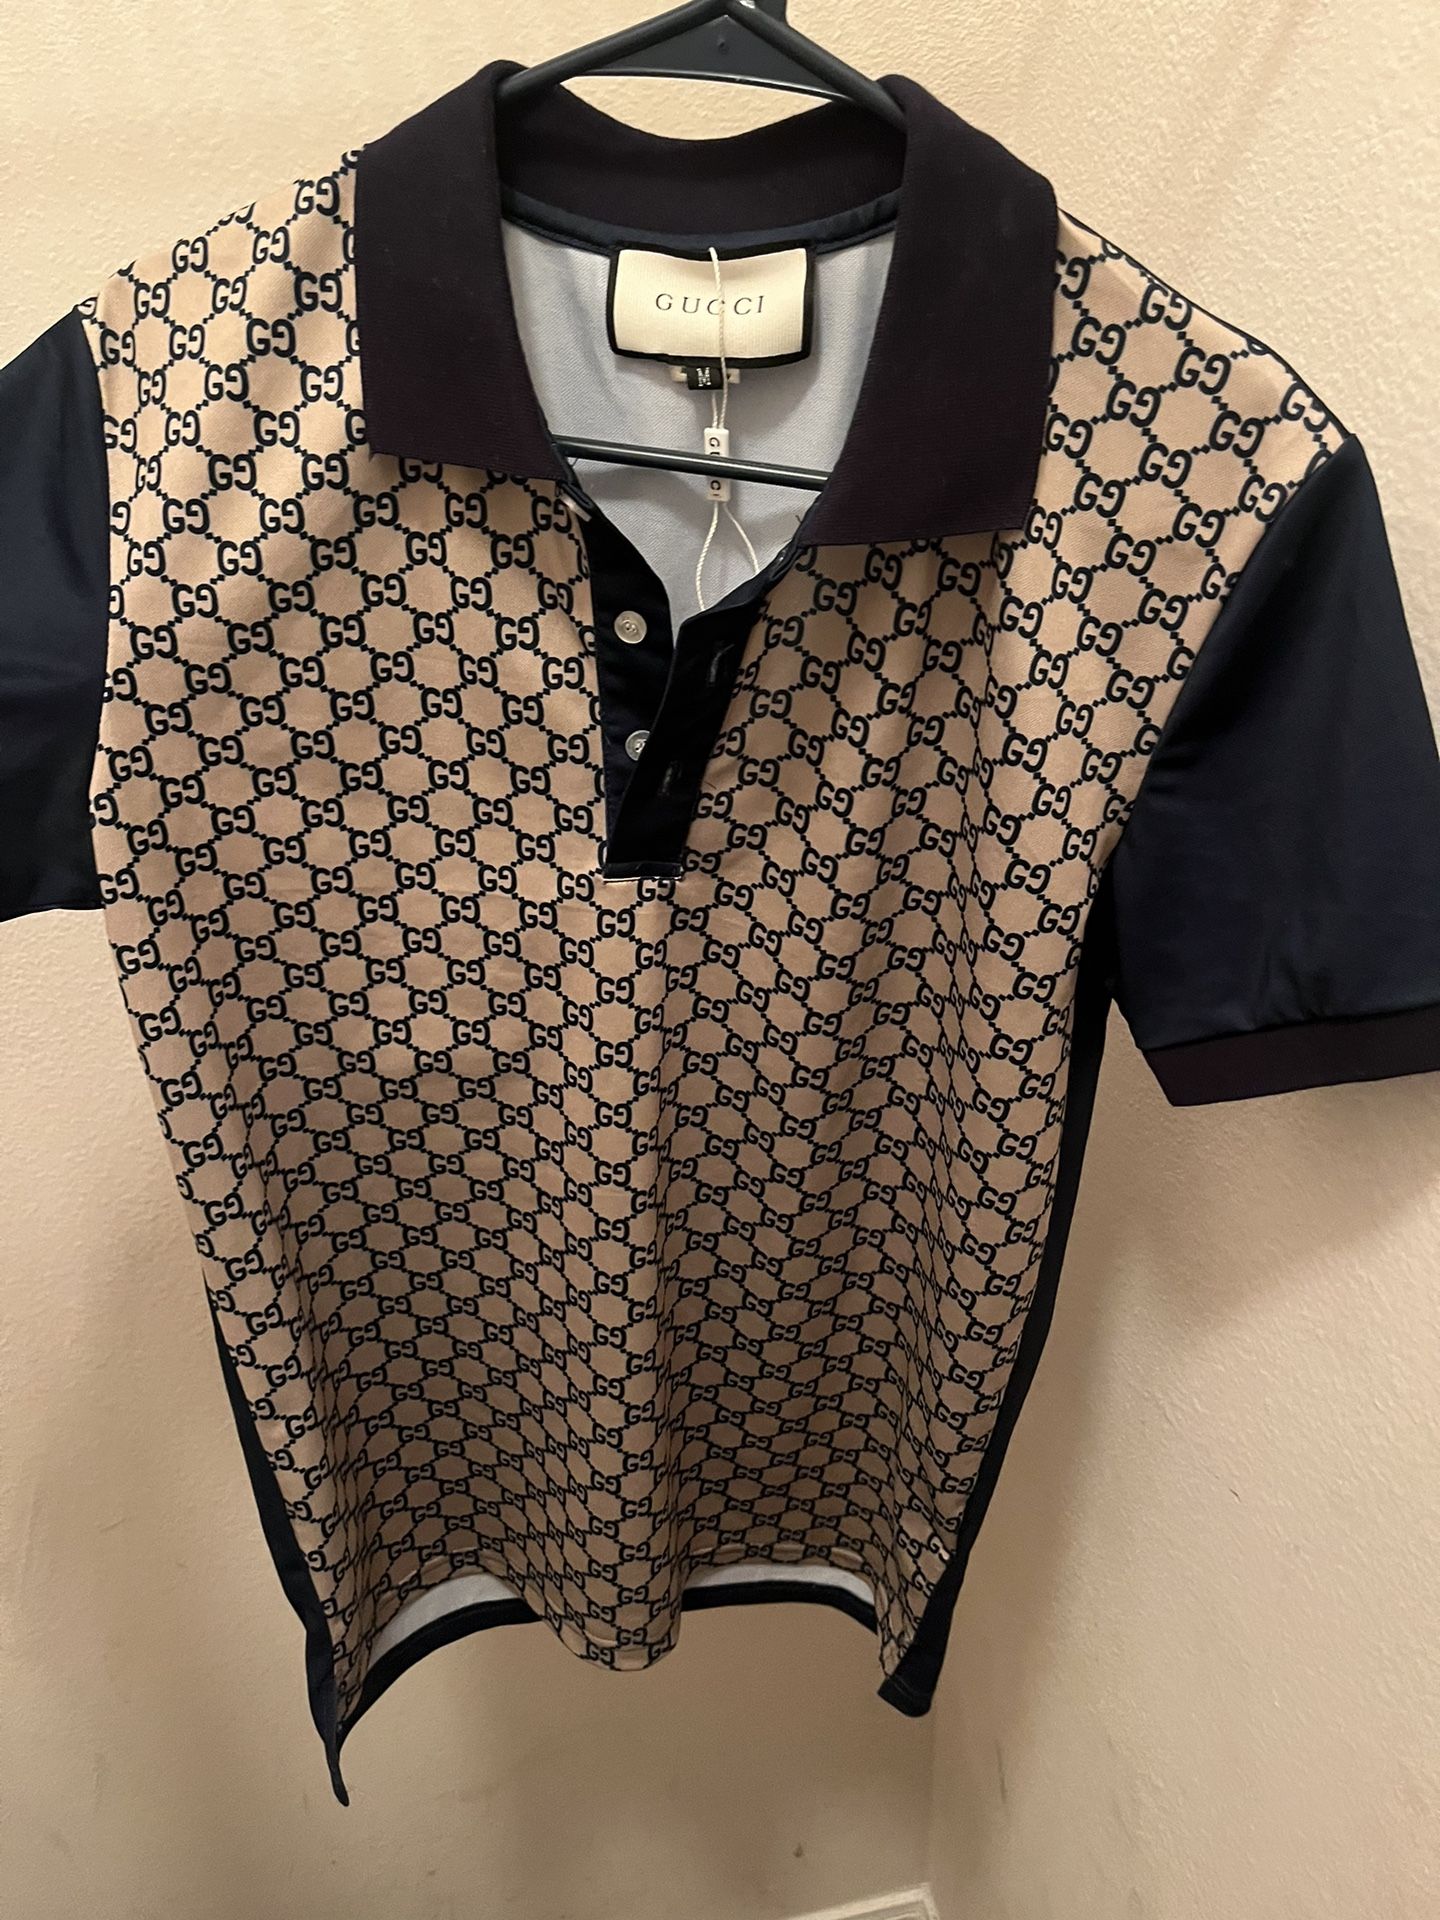 Gucci Men’s Small Gucci Collar Shirt